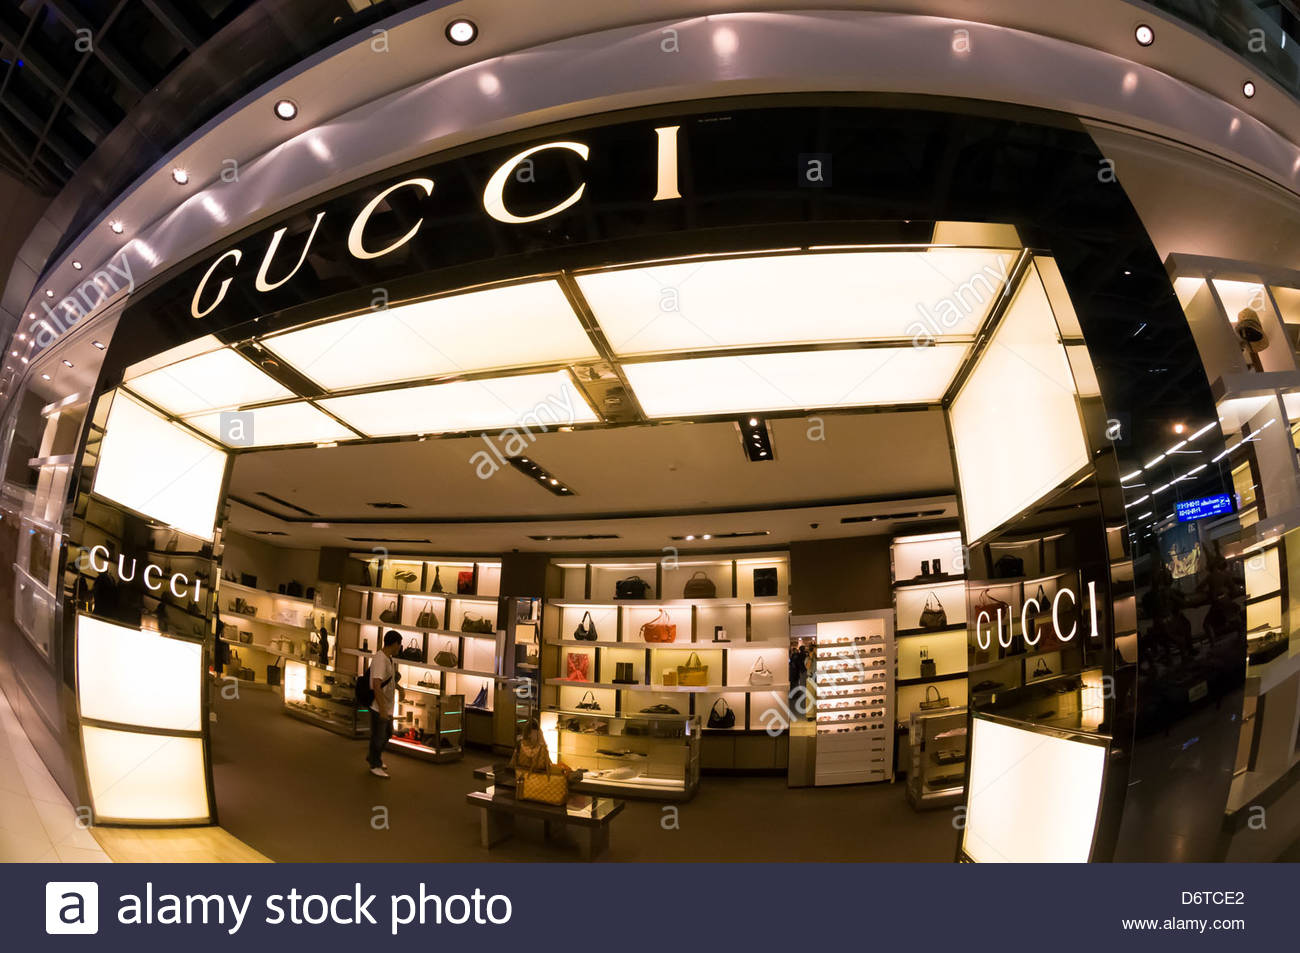 Gucci Shop Stockfotos & Gucci Shop Bilder - Seite 2 - Alamy